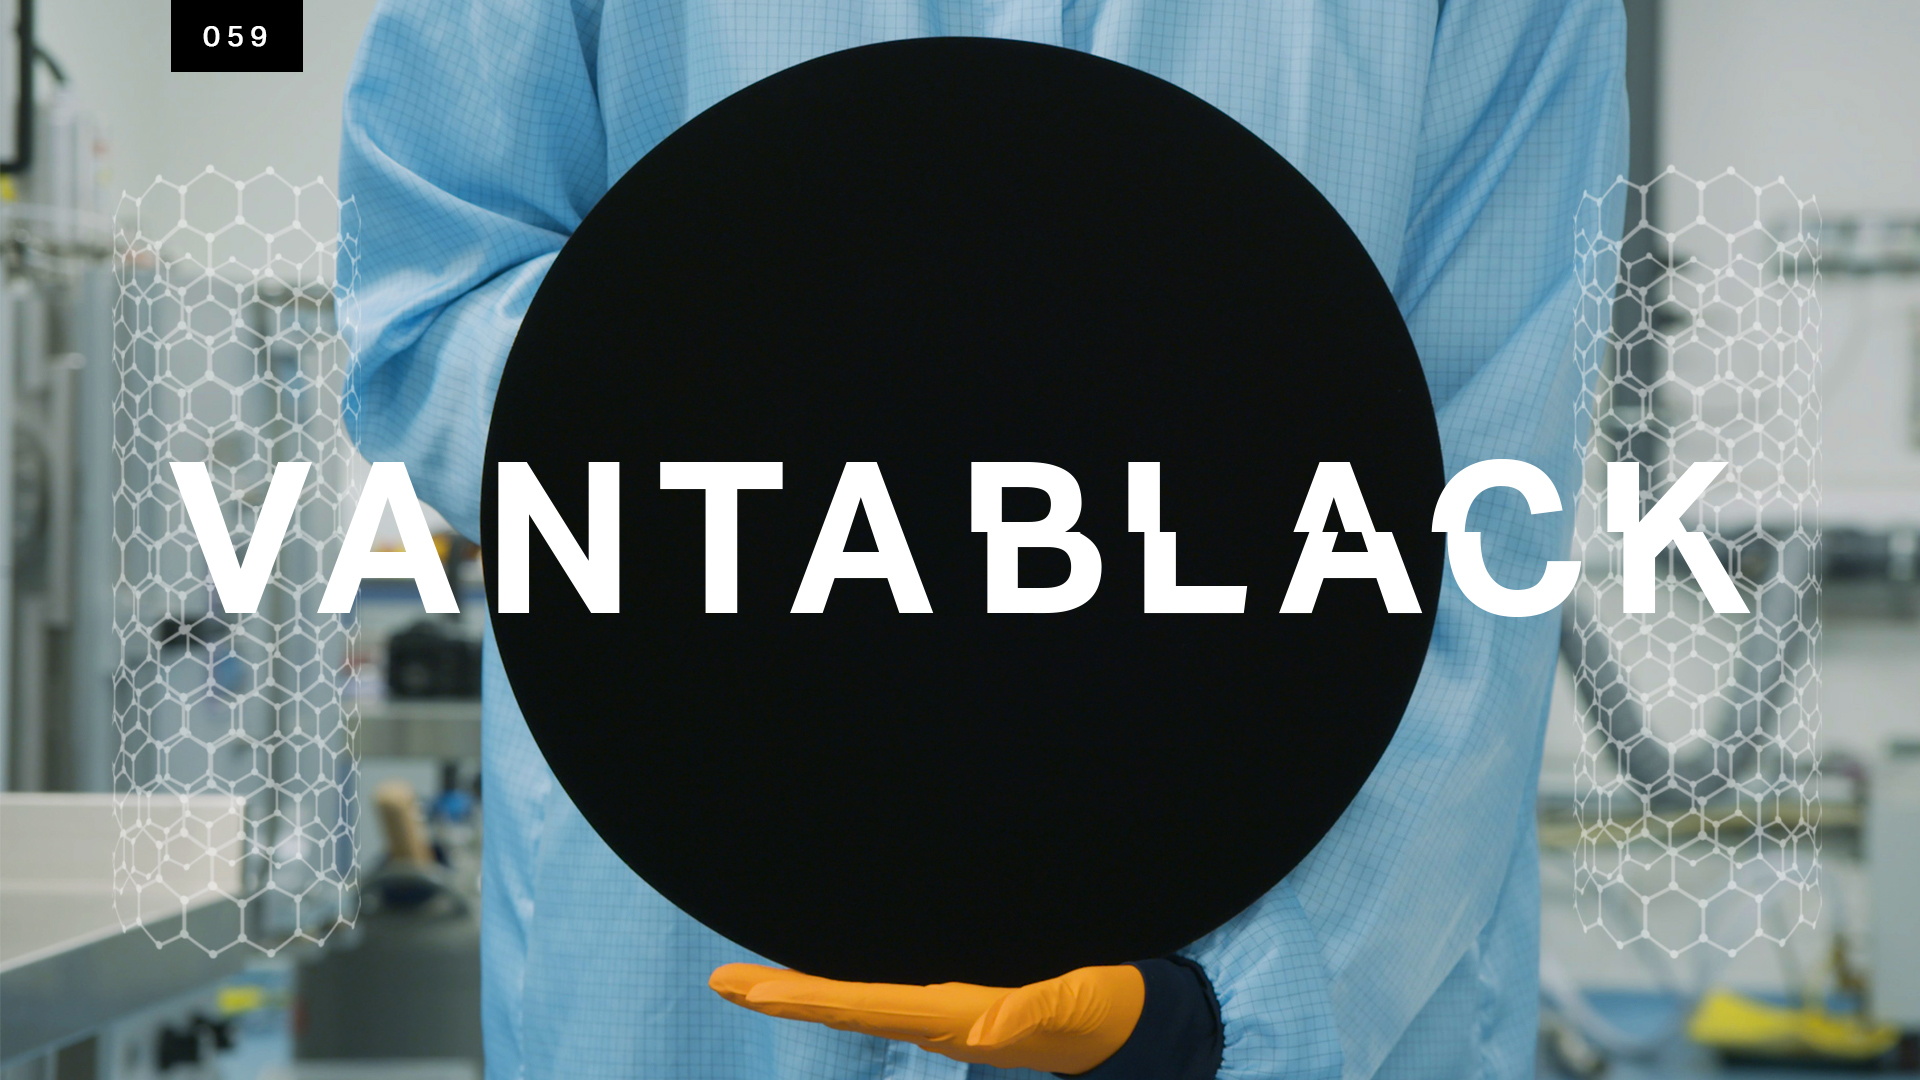 7 Vantablack And Musuo Black Cars: Embrace The Dark Side